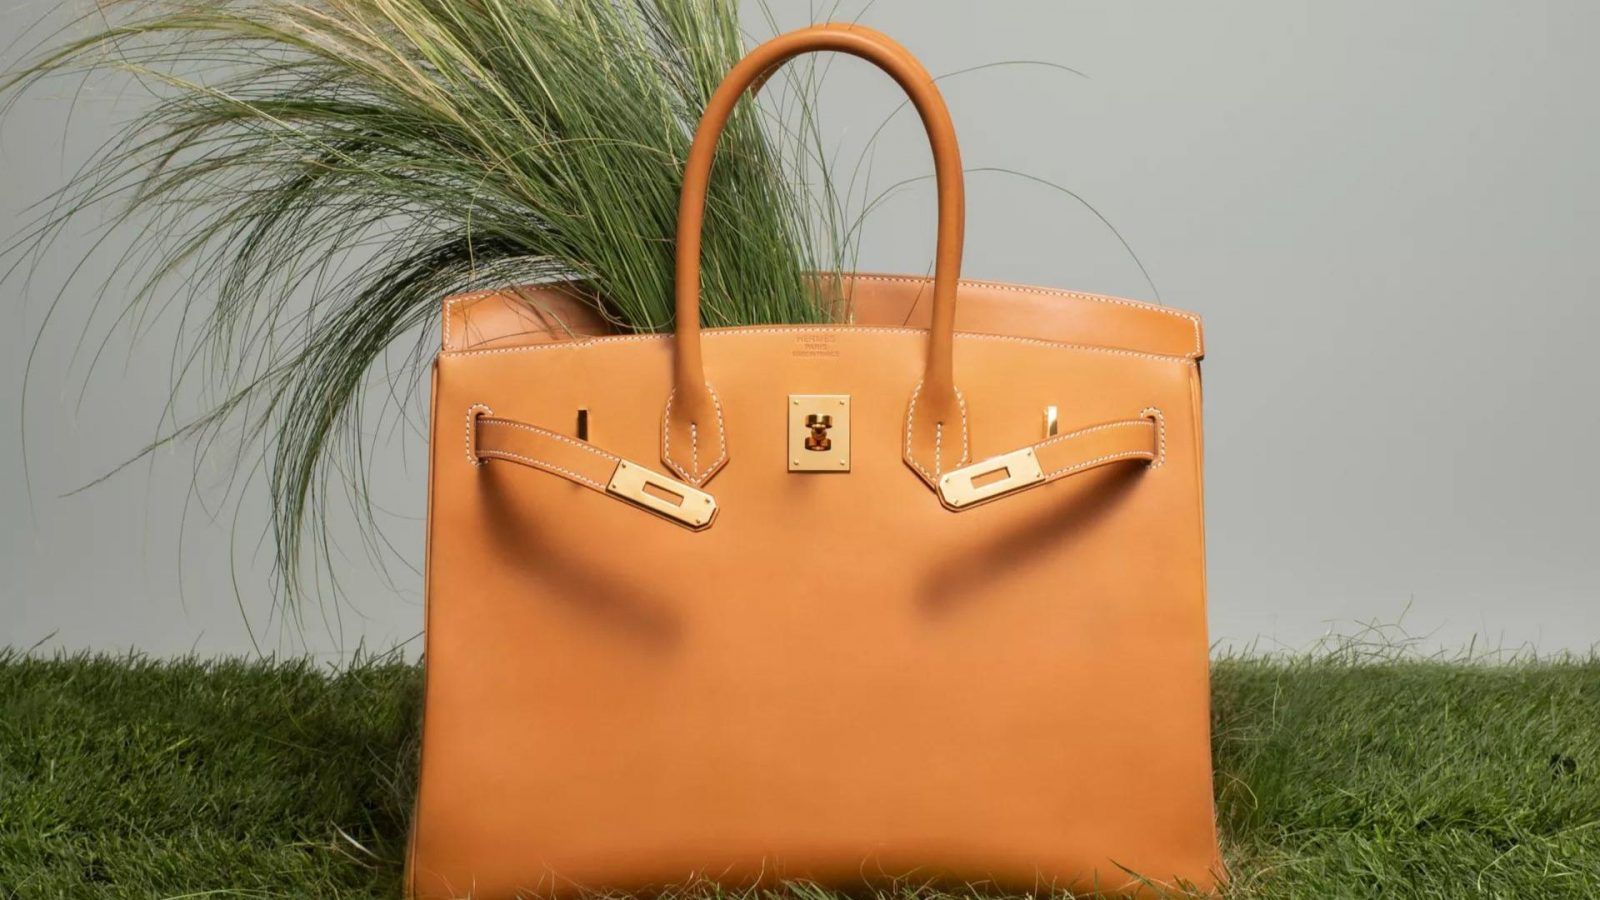 Hermès Birkin Bag Price Guide 2023 - Why Birkin Bags So Expensive